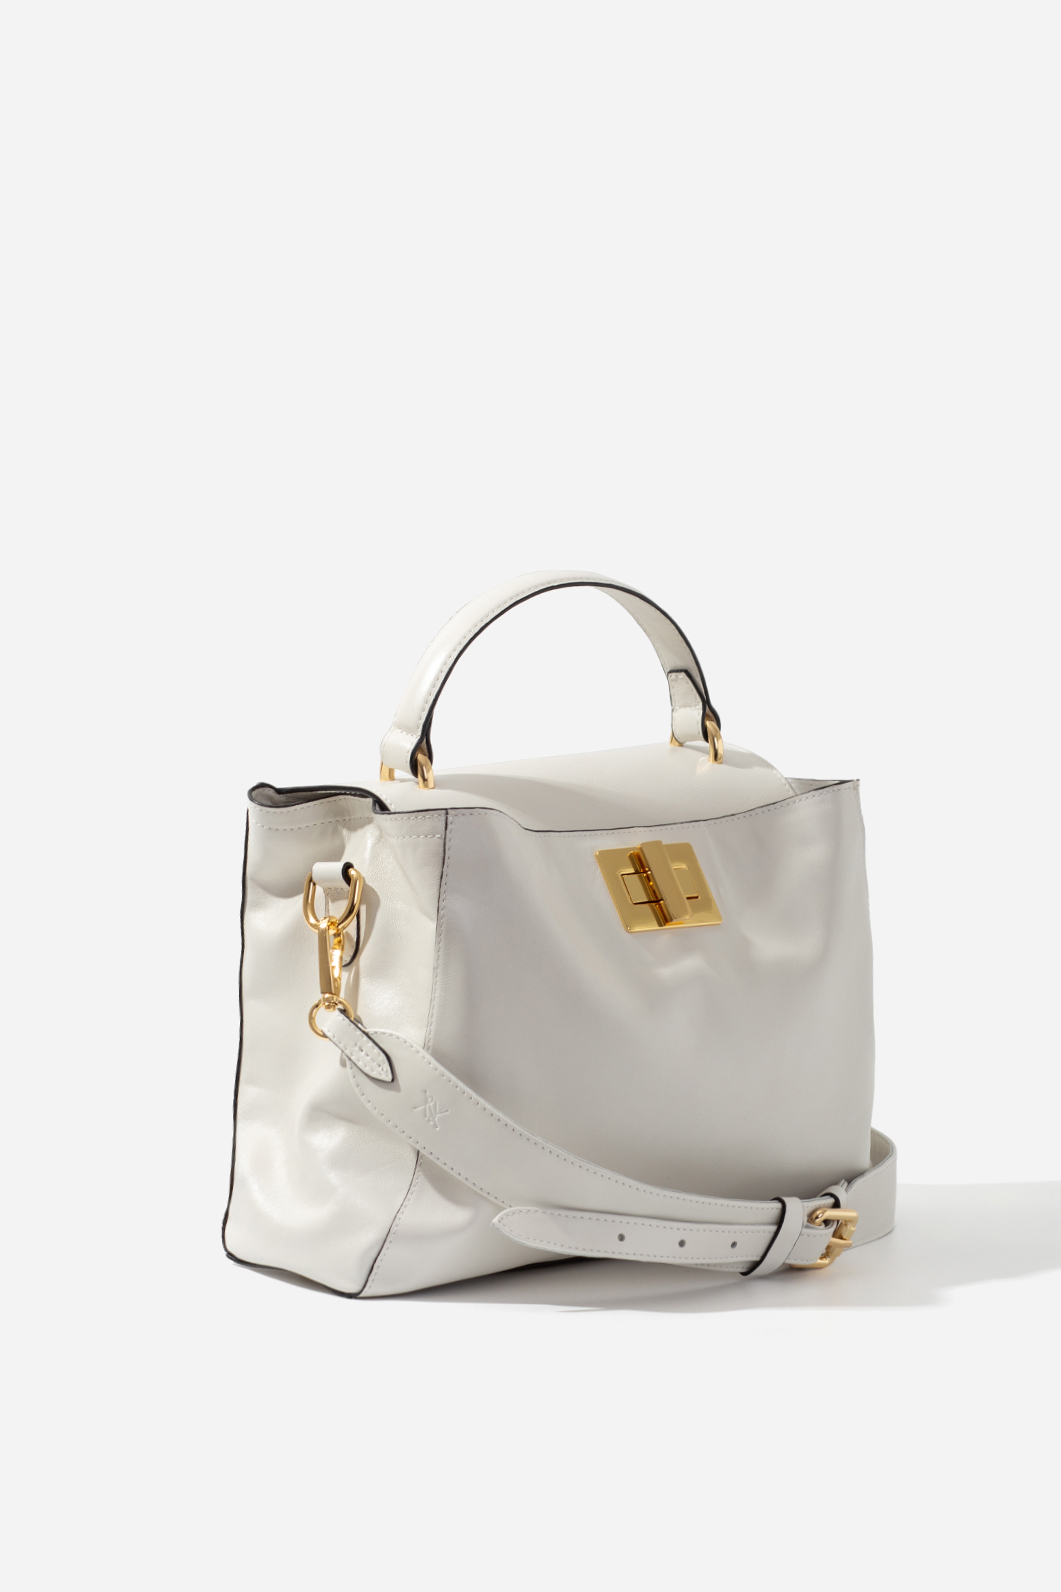 ERNA SOFT white bag /gold/